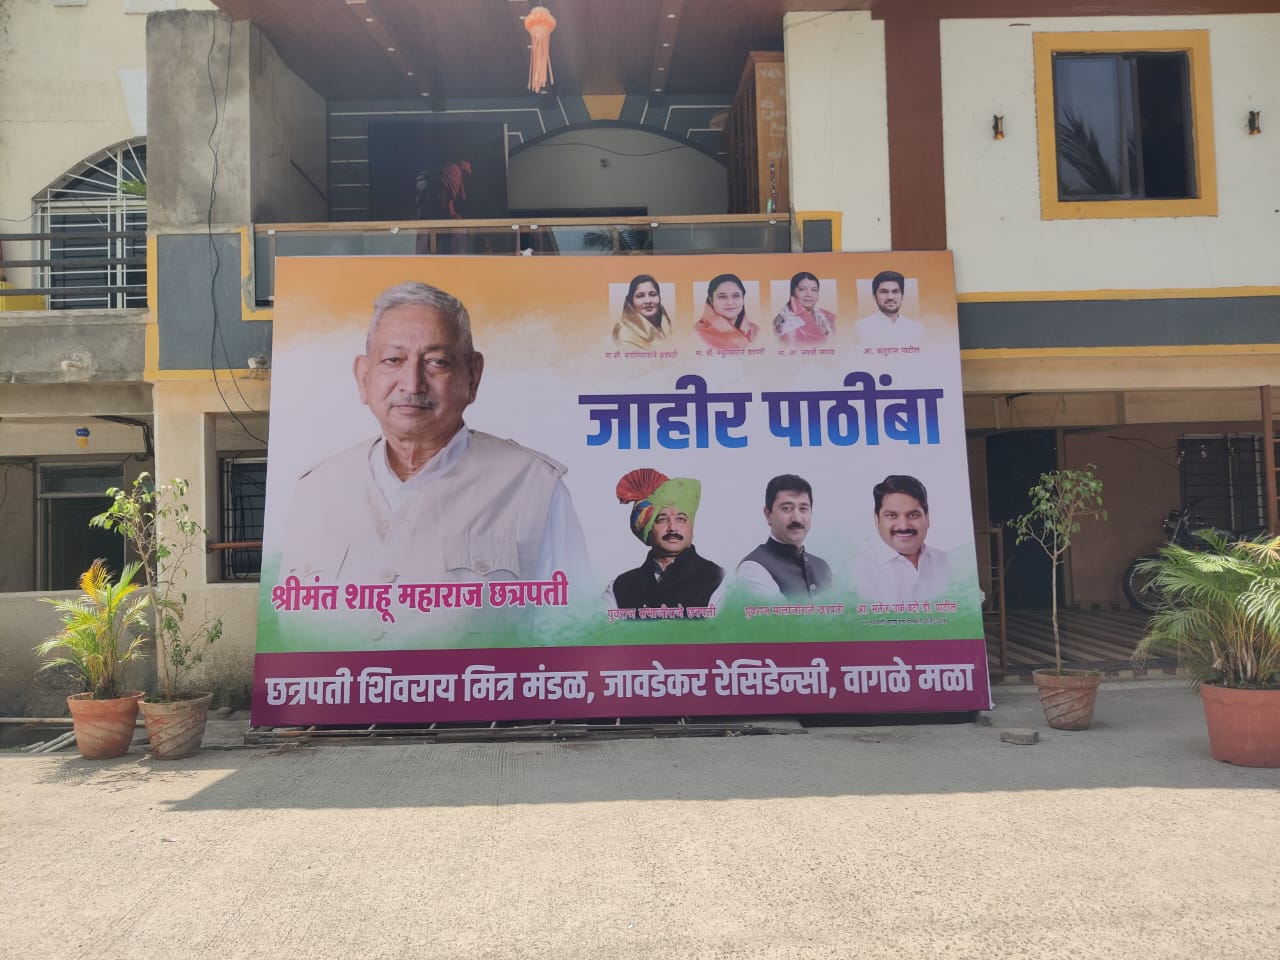 Public support for Chhatrapati Shahu Maharaj from Kolhapur